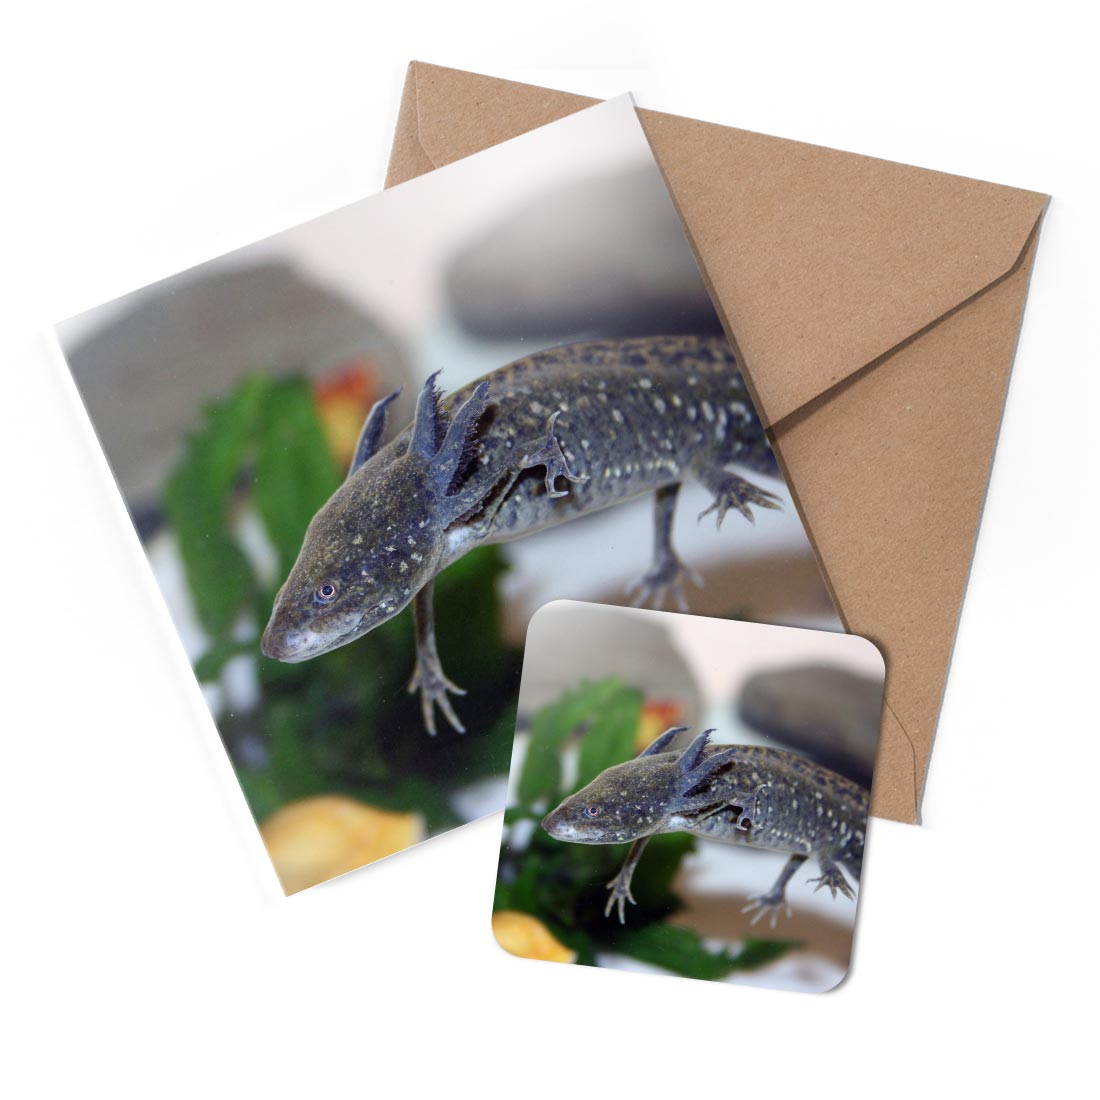 1 x Greeting Card & Coaster Set - Cool Axolotl Dragon Fish #50599 AN9294